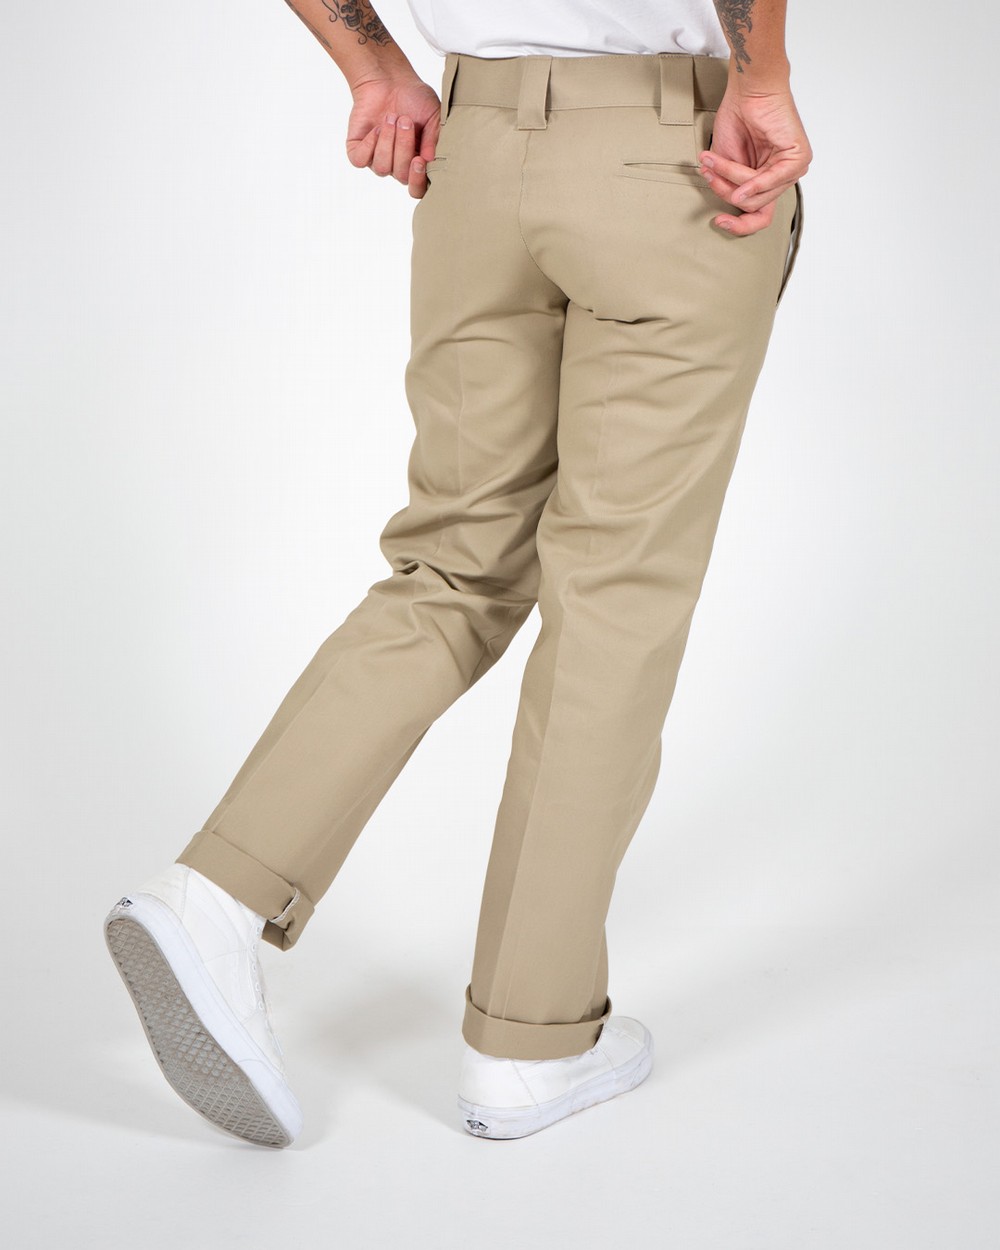 Mua Plaid&Plain Men's Skinny Stretchy Khaki Pants Colored Pants Slim Fit Slacks  Tapered Trousers trên Amazon Mỹ chính hãng 2023 | Giaonhan247